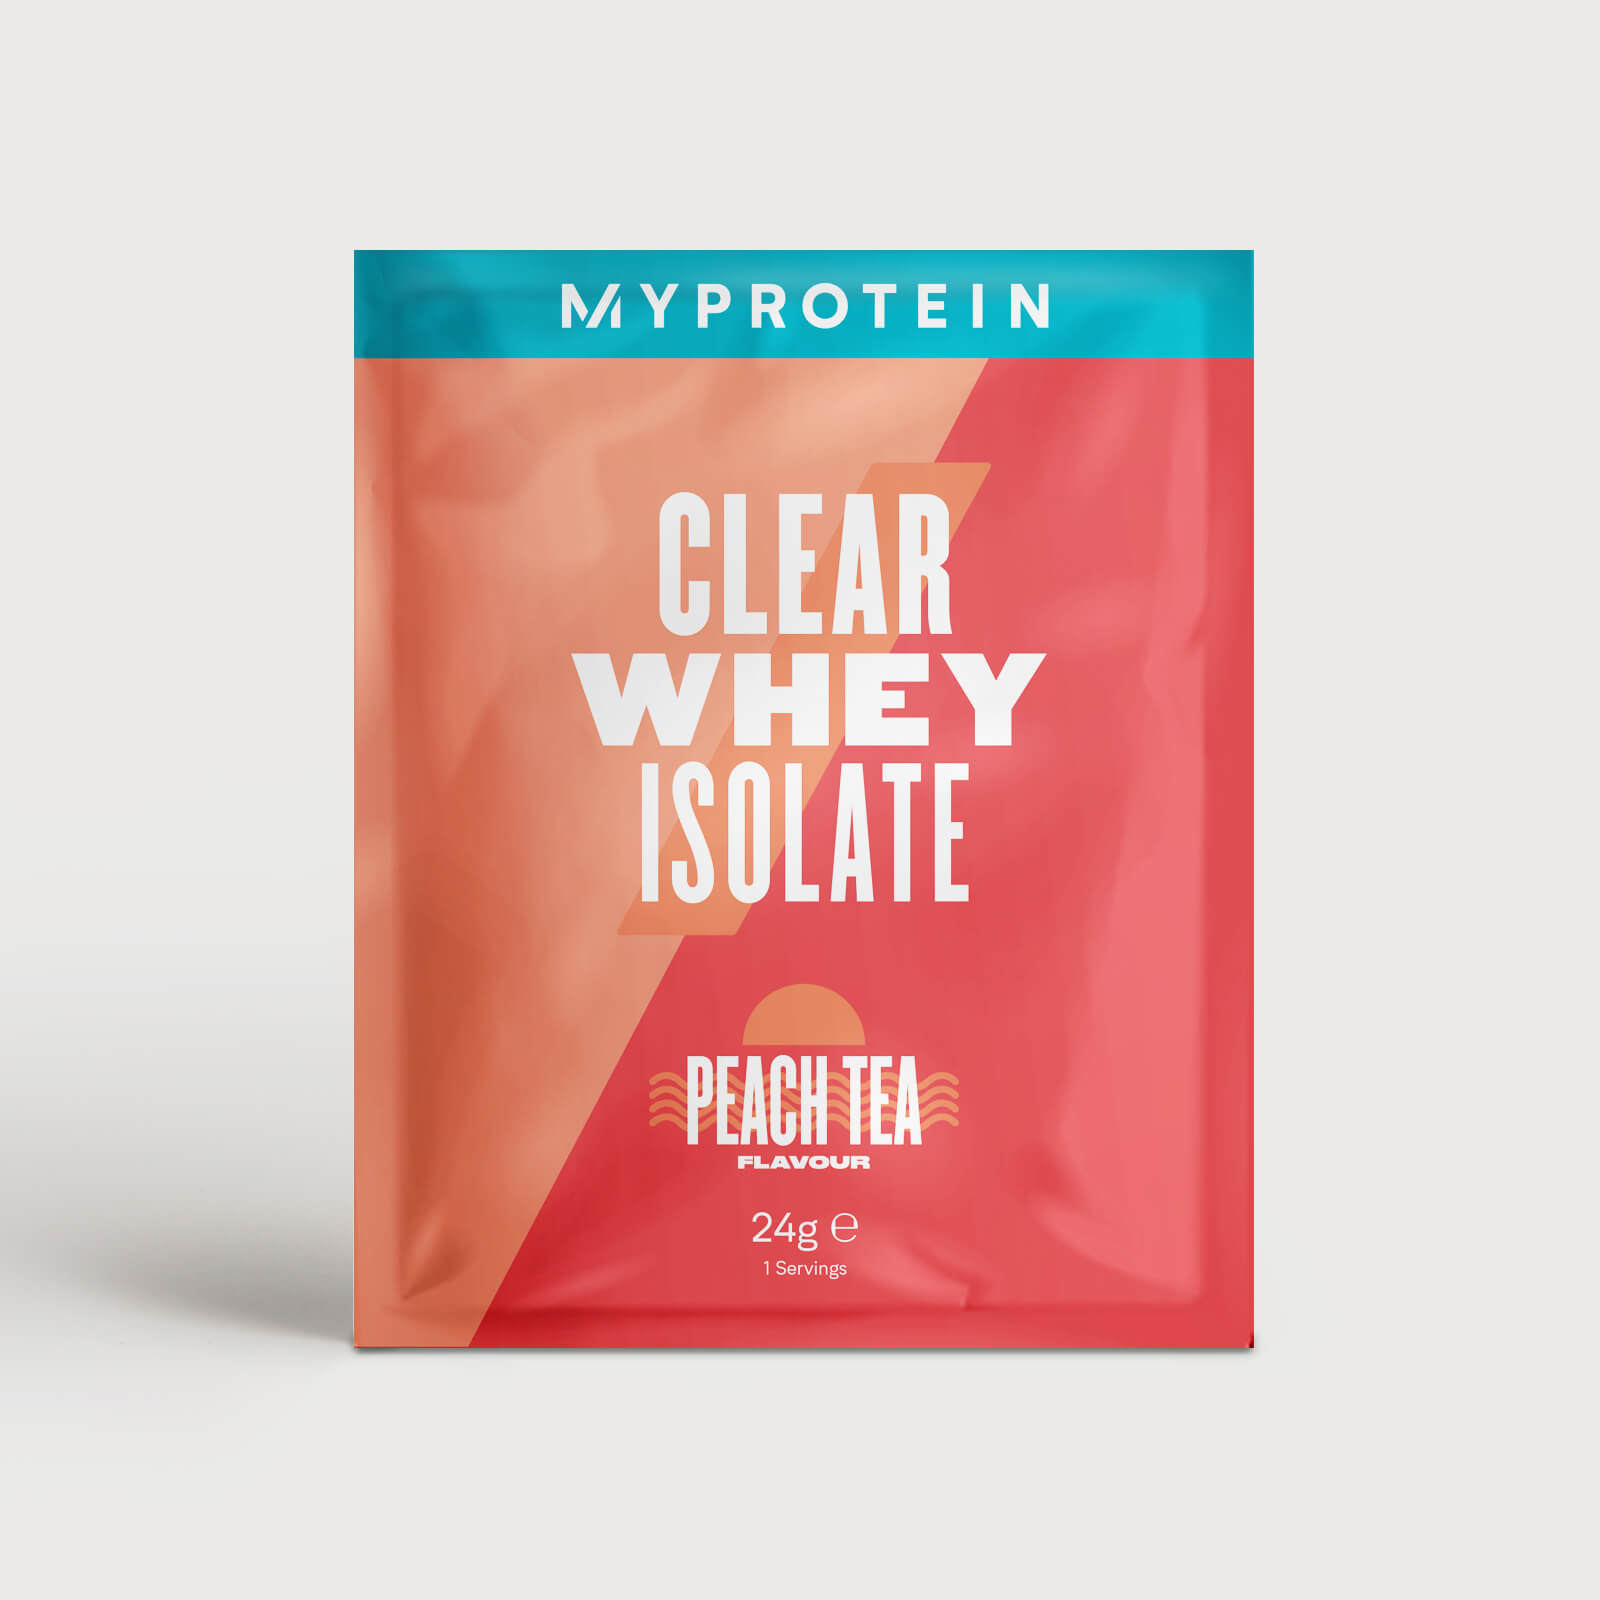 Myprotein Clear Whey Isolate (Sample) - 1servings - Trà Đào